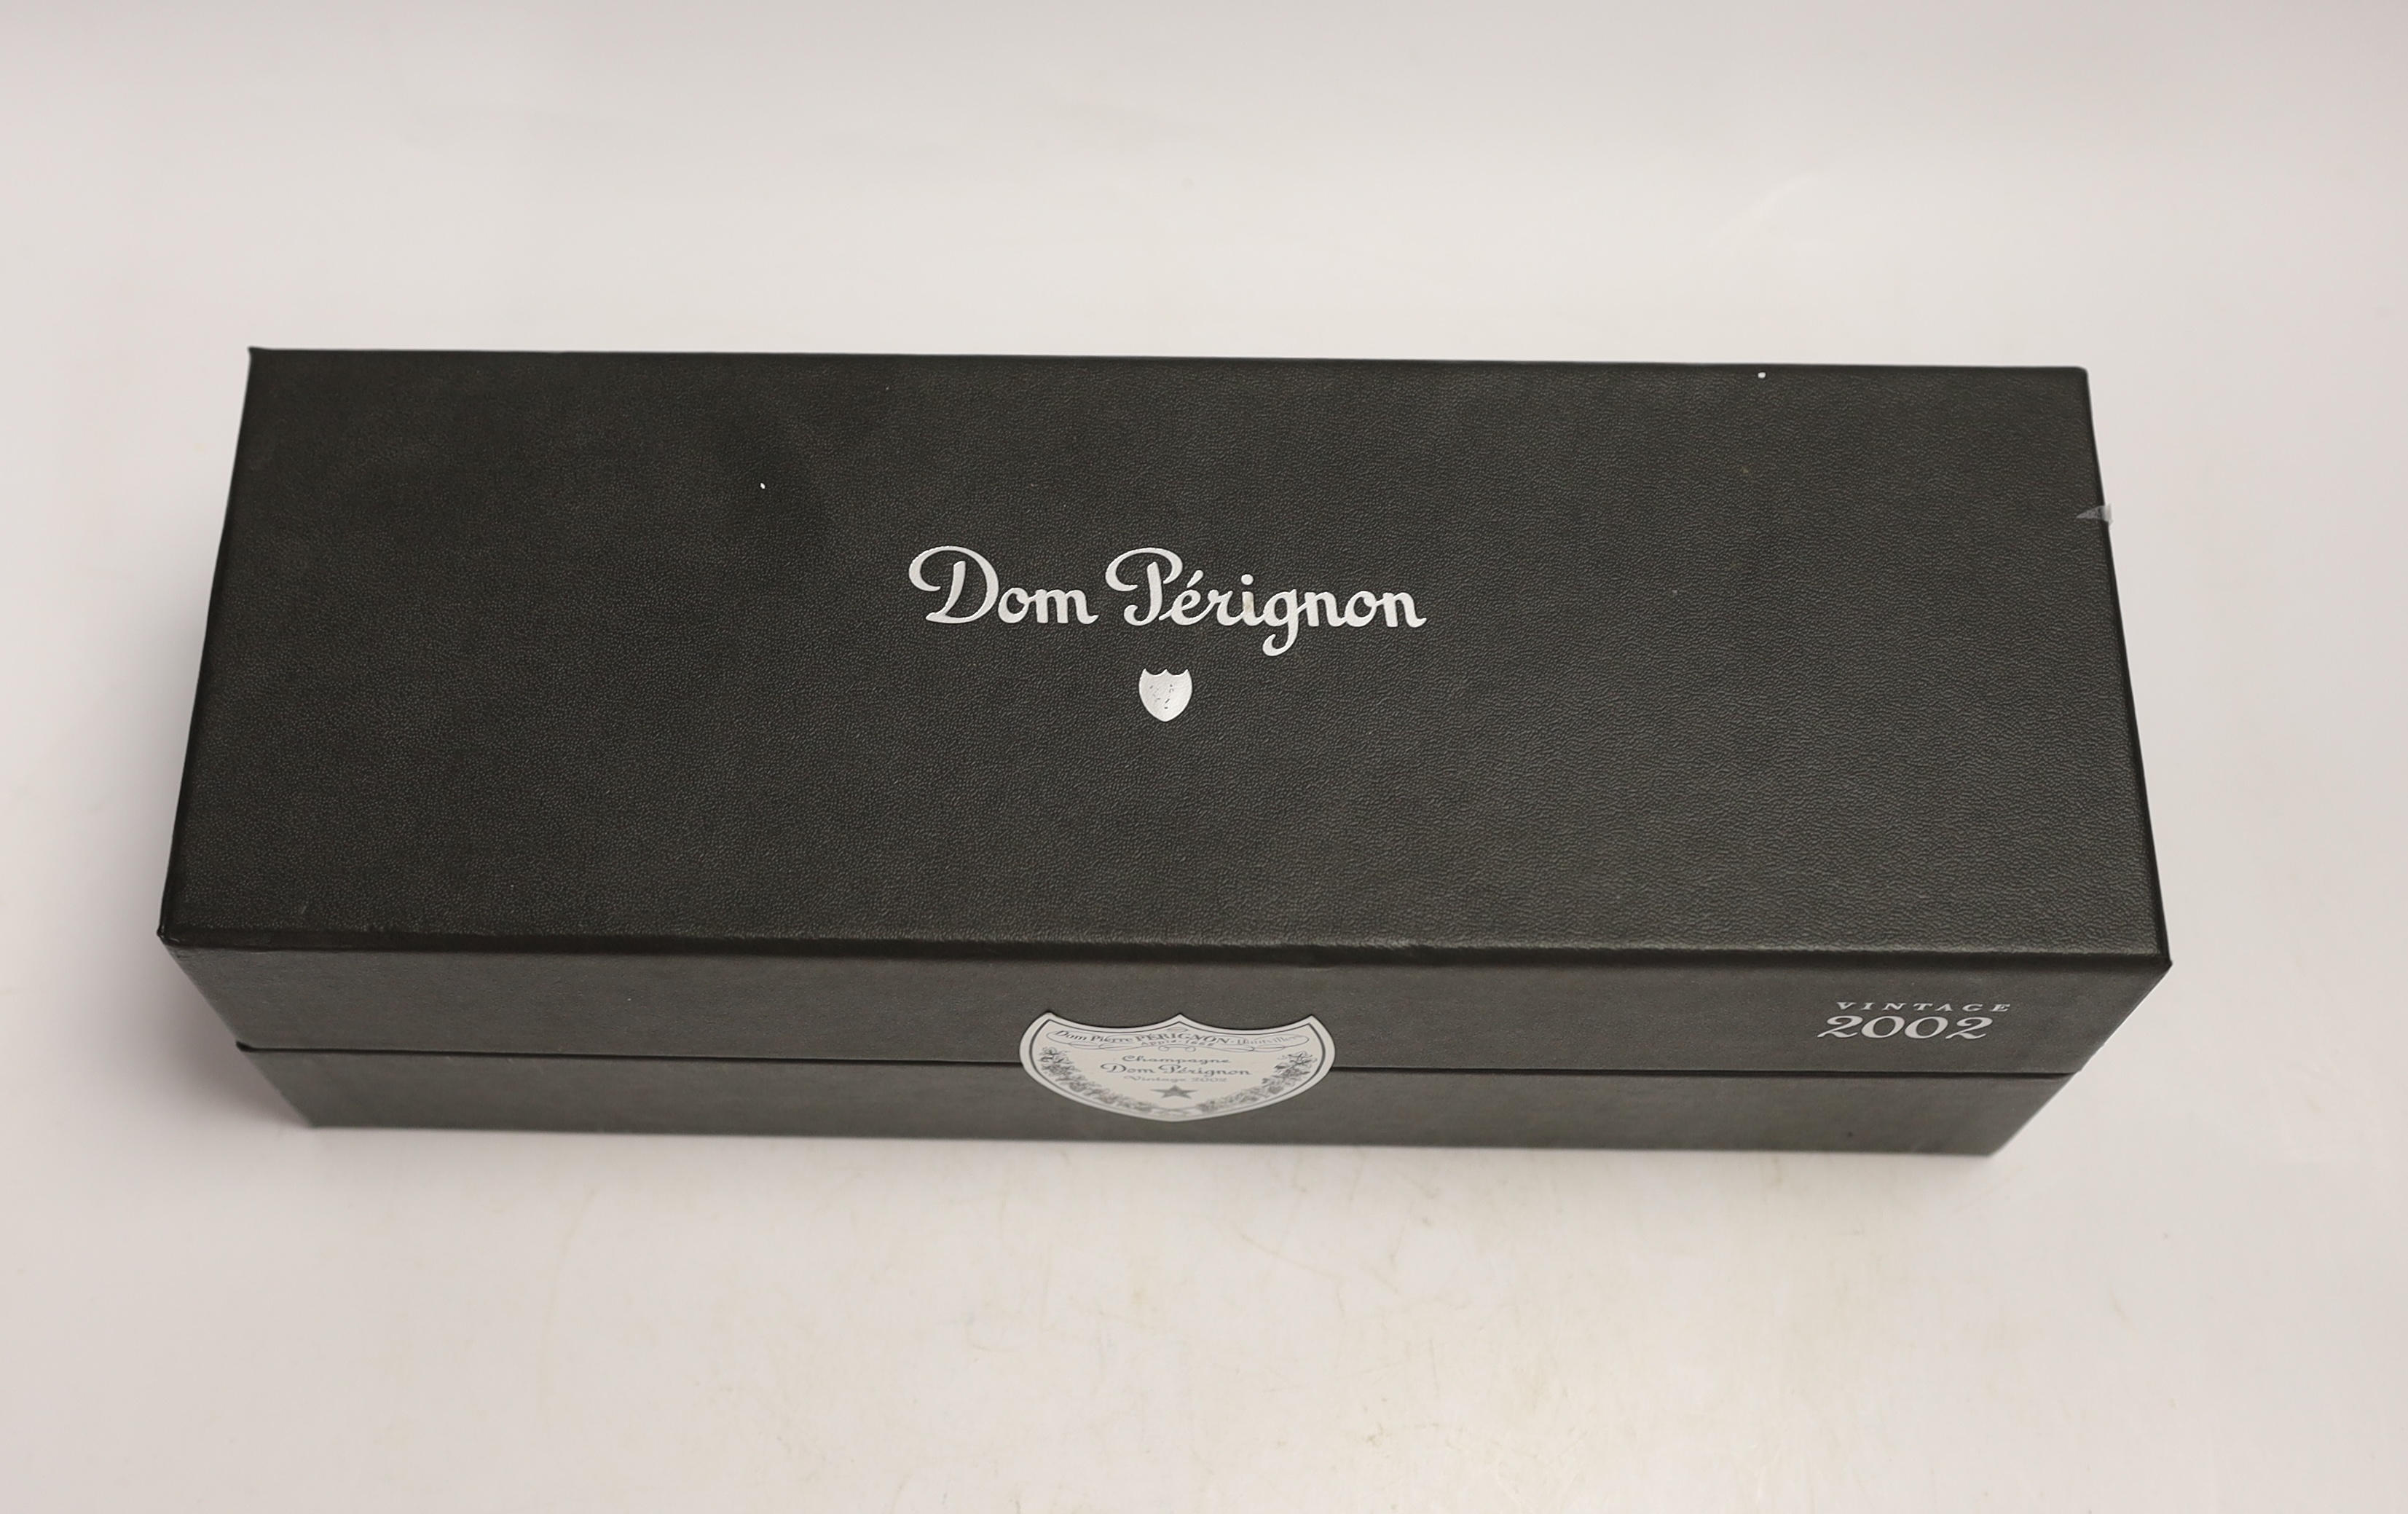 One cased bottle of Dom Perignon vintage 2002